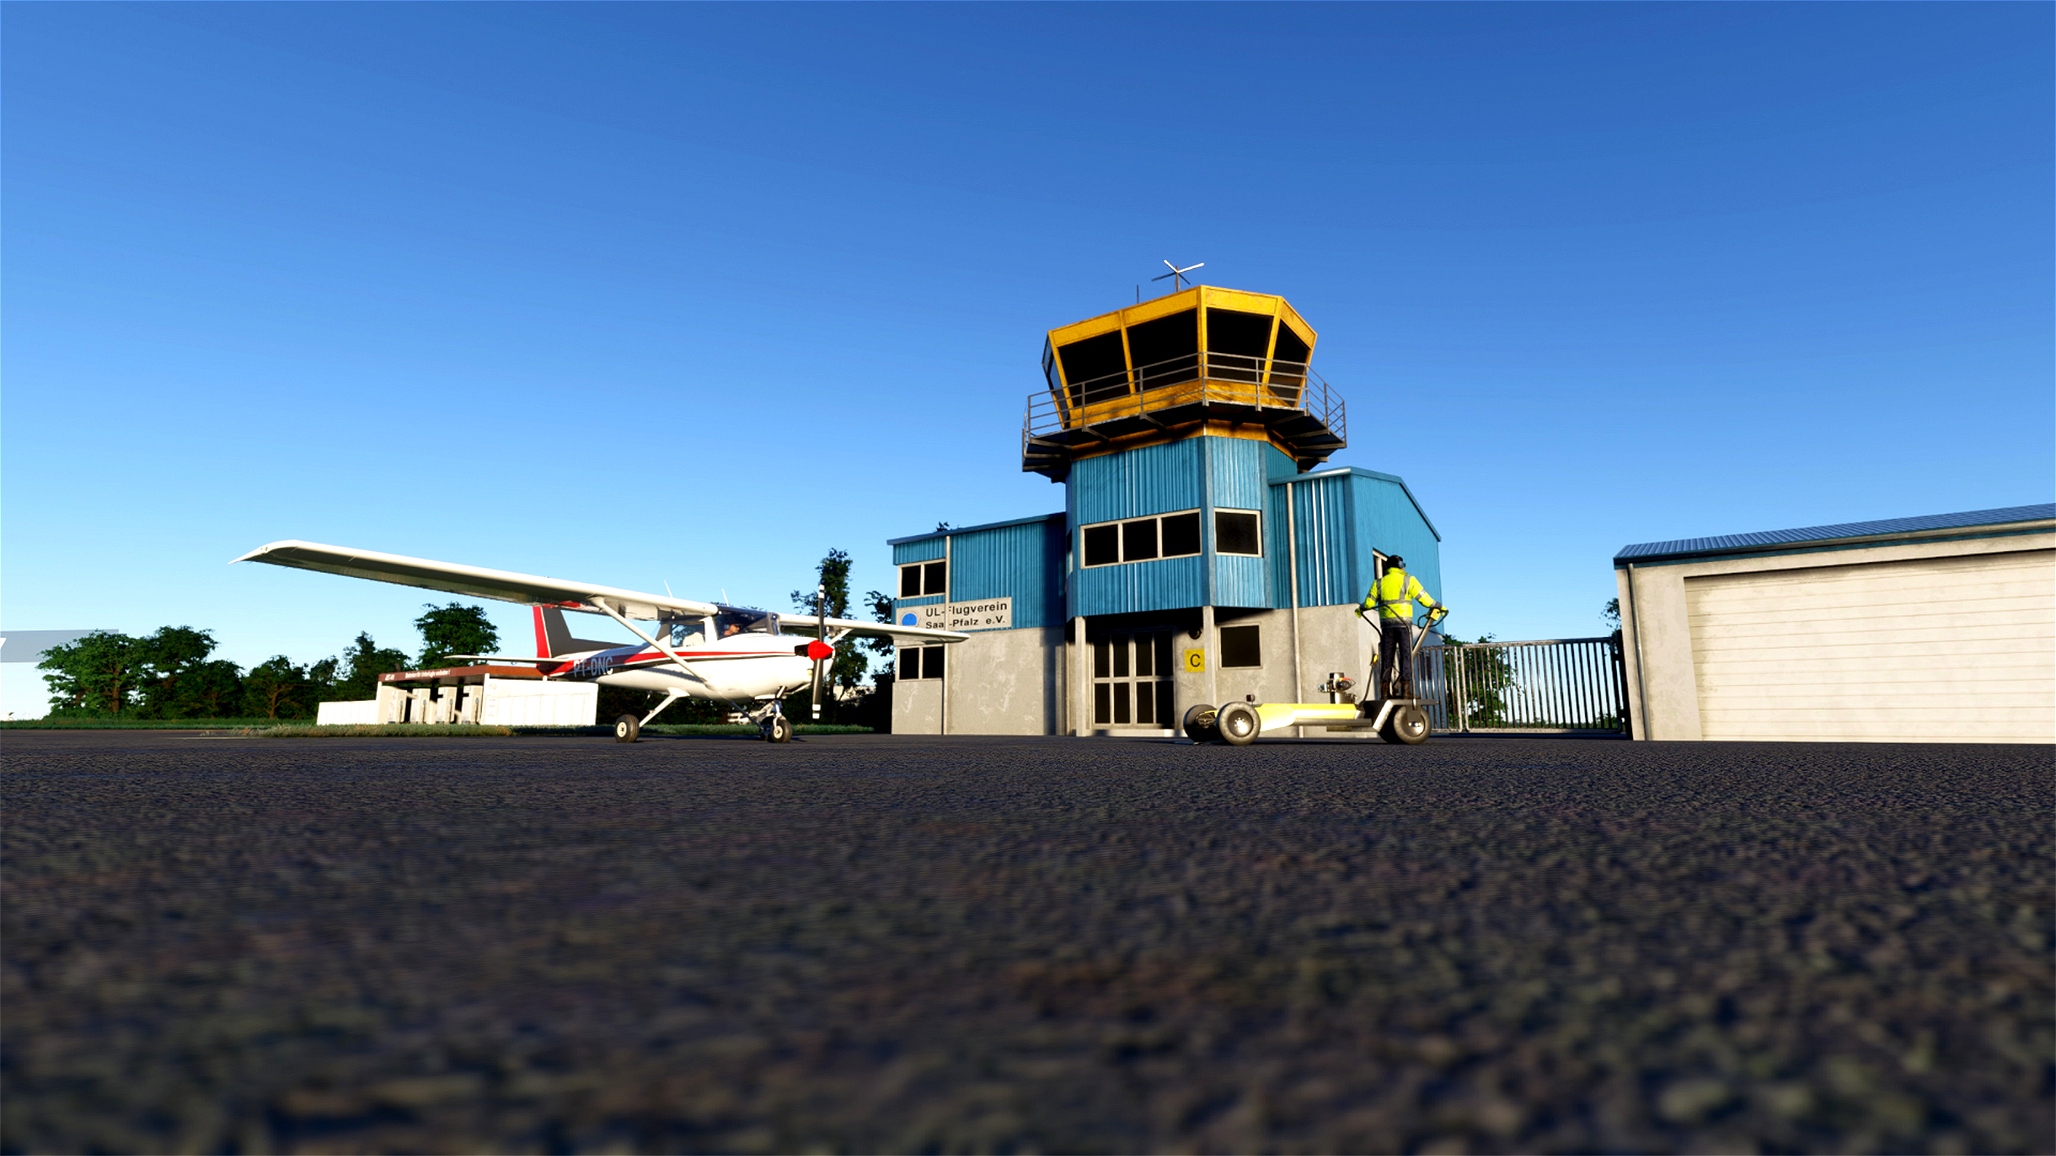  EDRP - Pirmasens Airfield Microsoft Flight Simulator